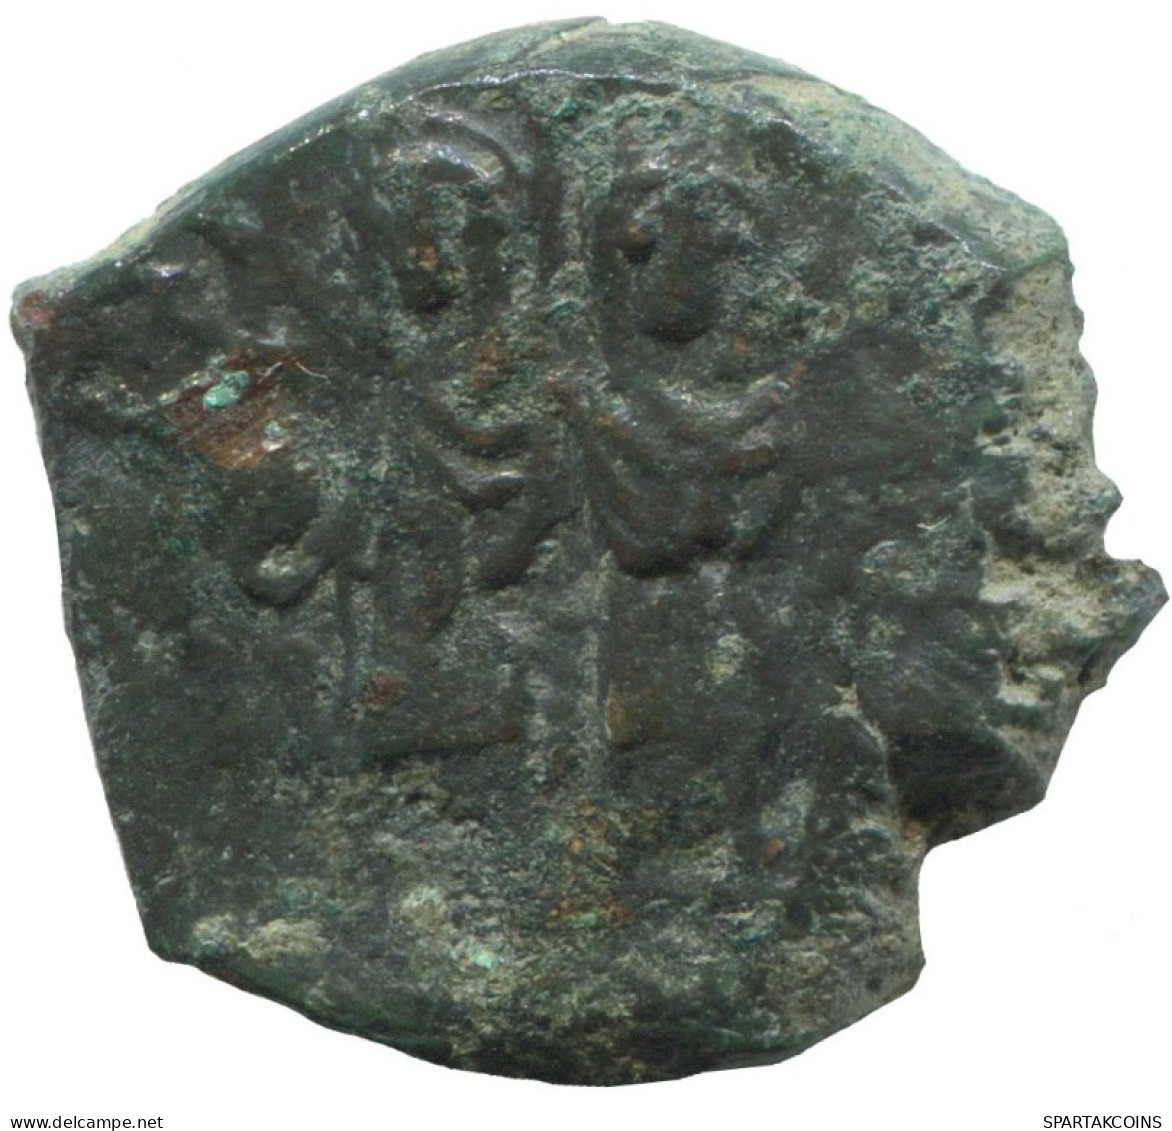 AUTHENTIC ORIGINAL ANCIENT BYZANTINE Ancient Coin 6.1g/21mm #ANN1097.17.U.A - Byzantine